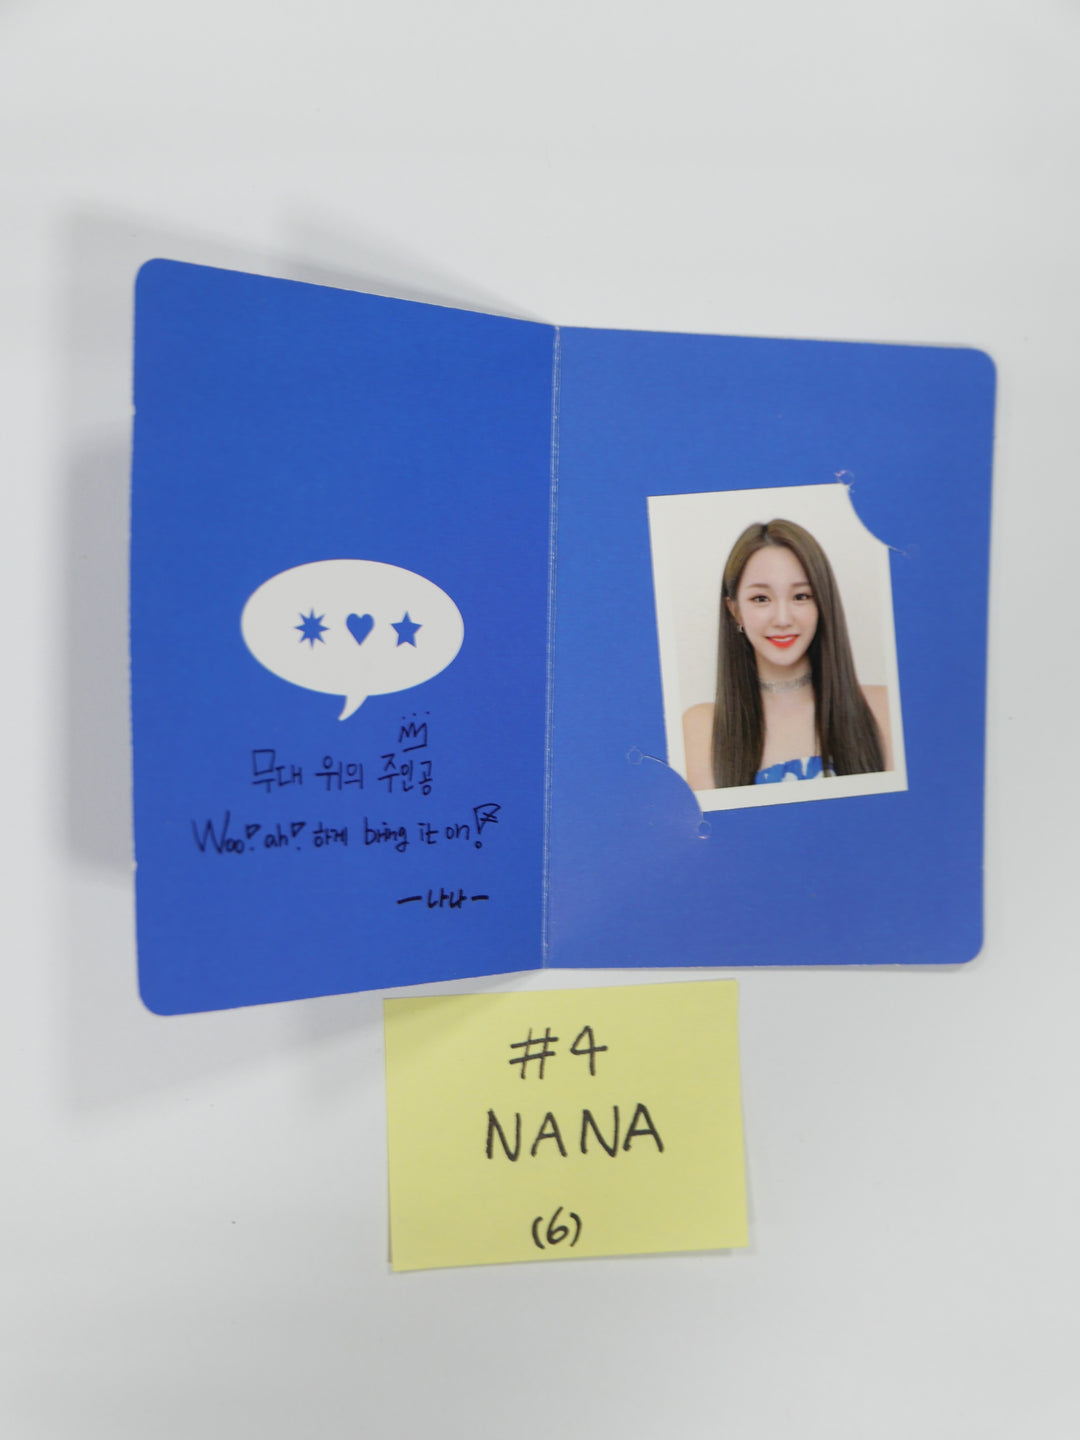 Woo!ah! 'Wish' - Official Photocard ( Nana, Wooyeon, Lucy )